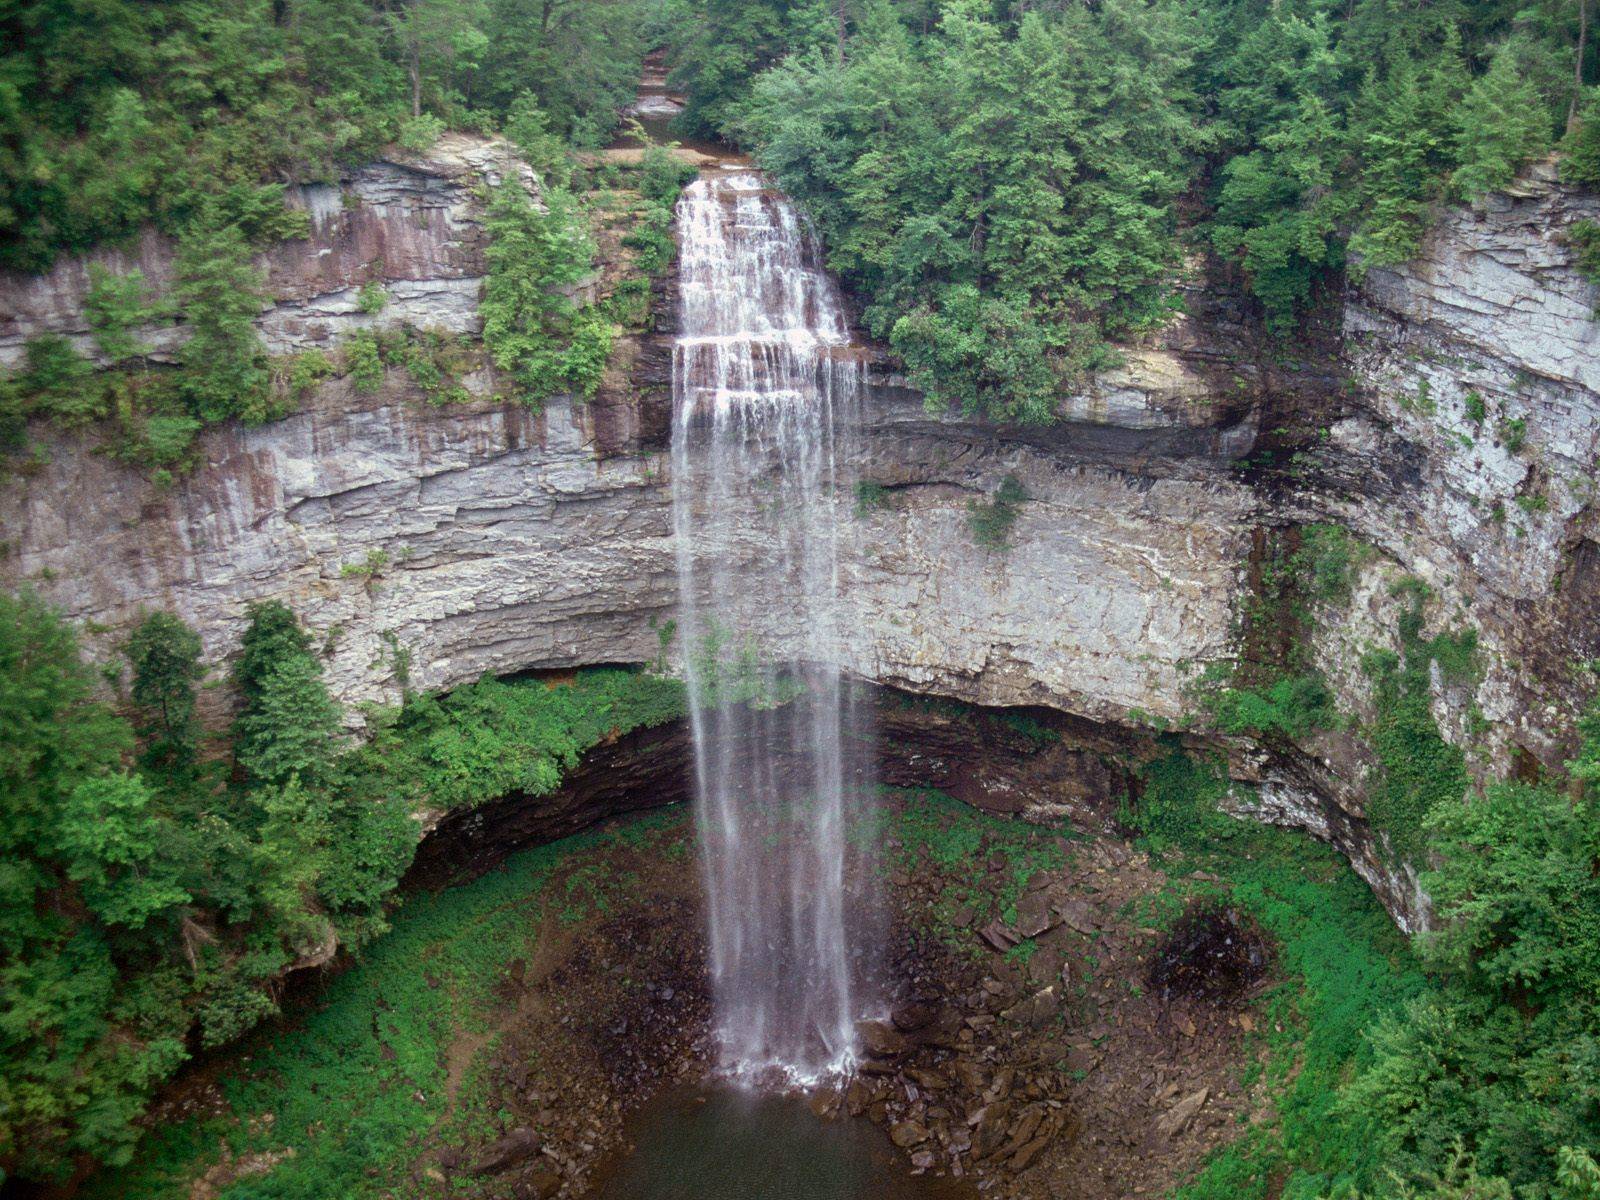 Cumberland Trail : Waterfall seen from trail